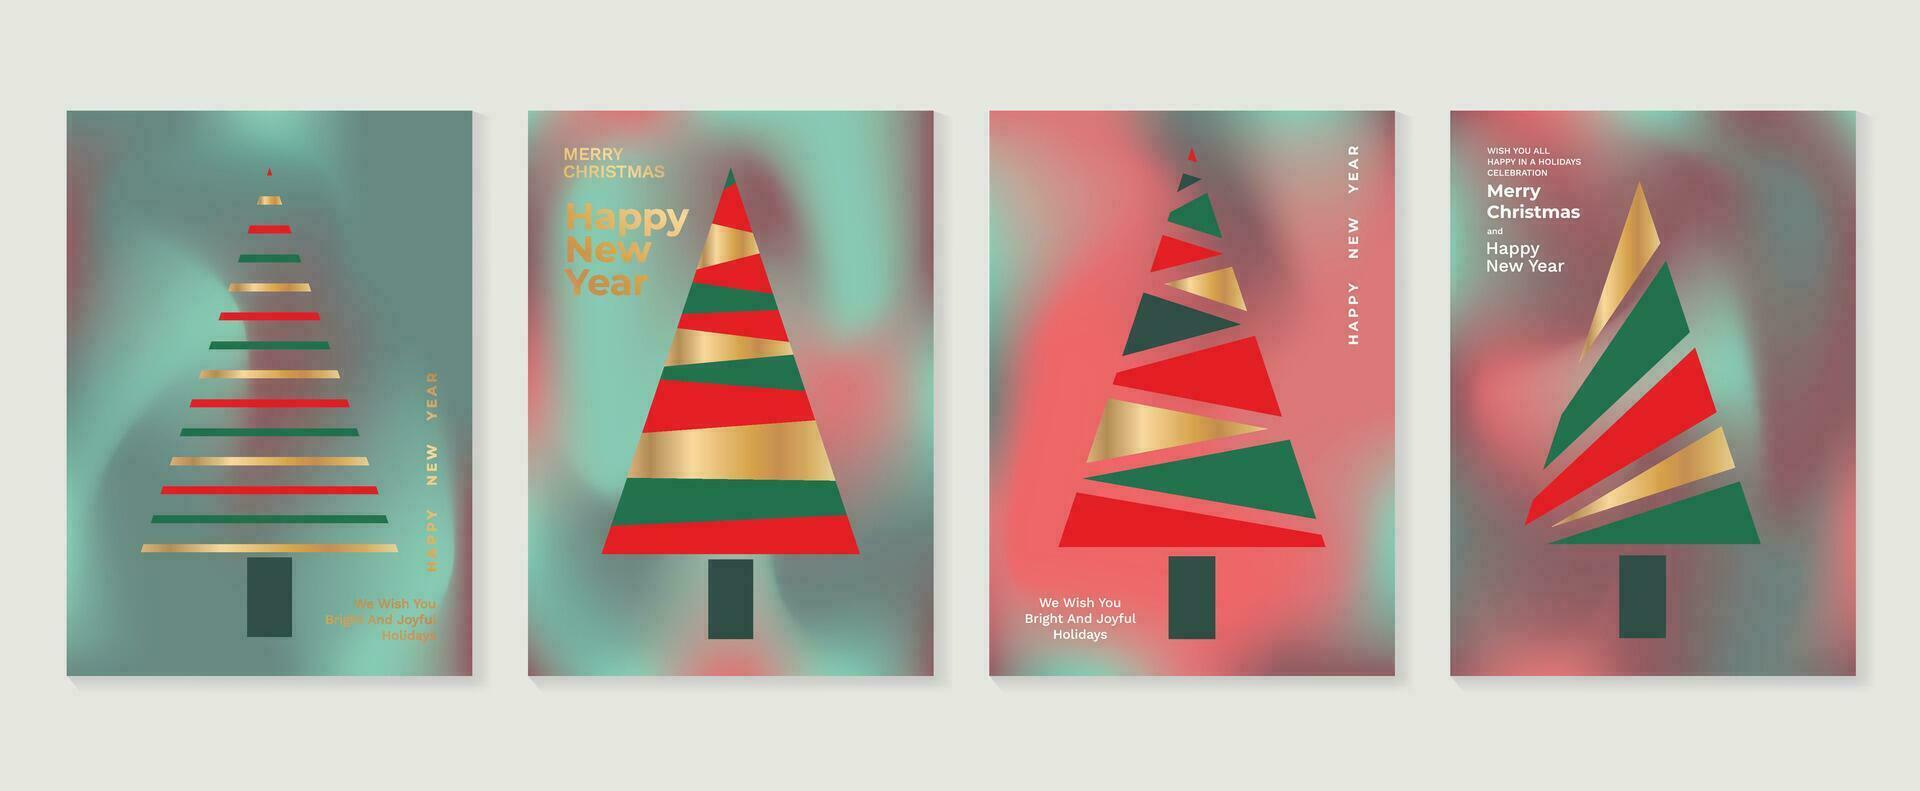 alegre Navidad concepto carteles colocar. linda degradado holográfico antecedentes vector con vibrante color, Navidad árbol. Arte de moda fondo de pantalla diseño para social medios de comunicación, tarjeta, bandera, volantes.